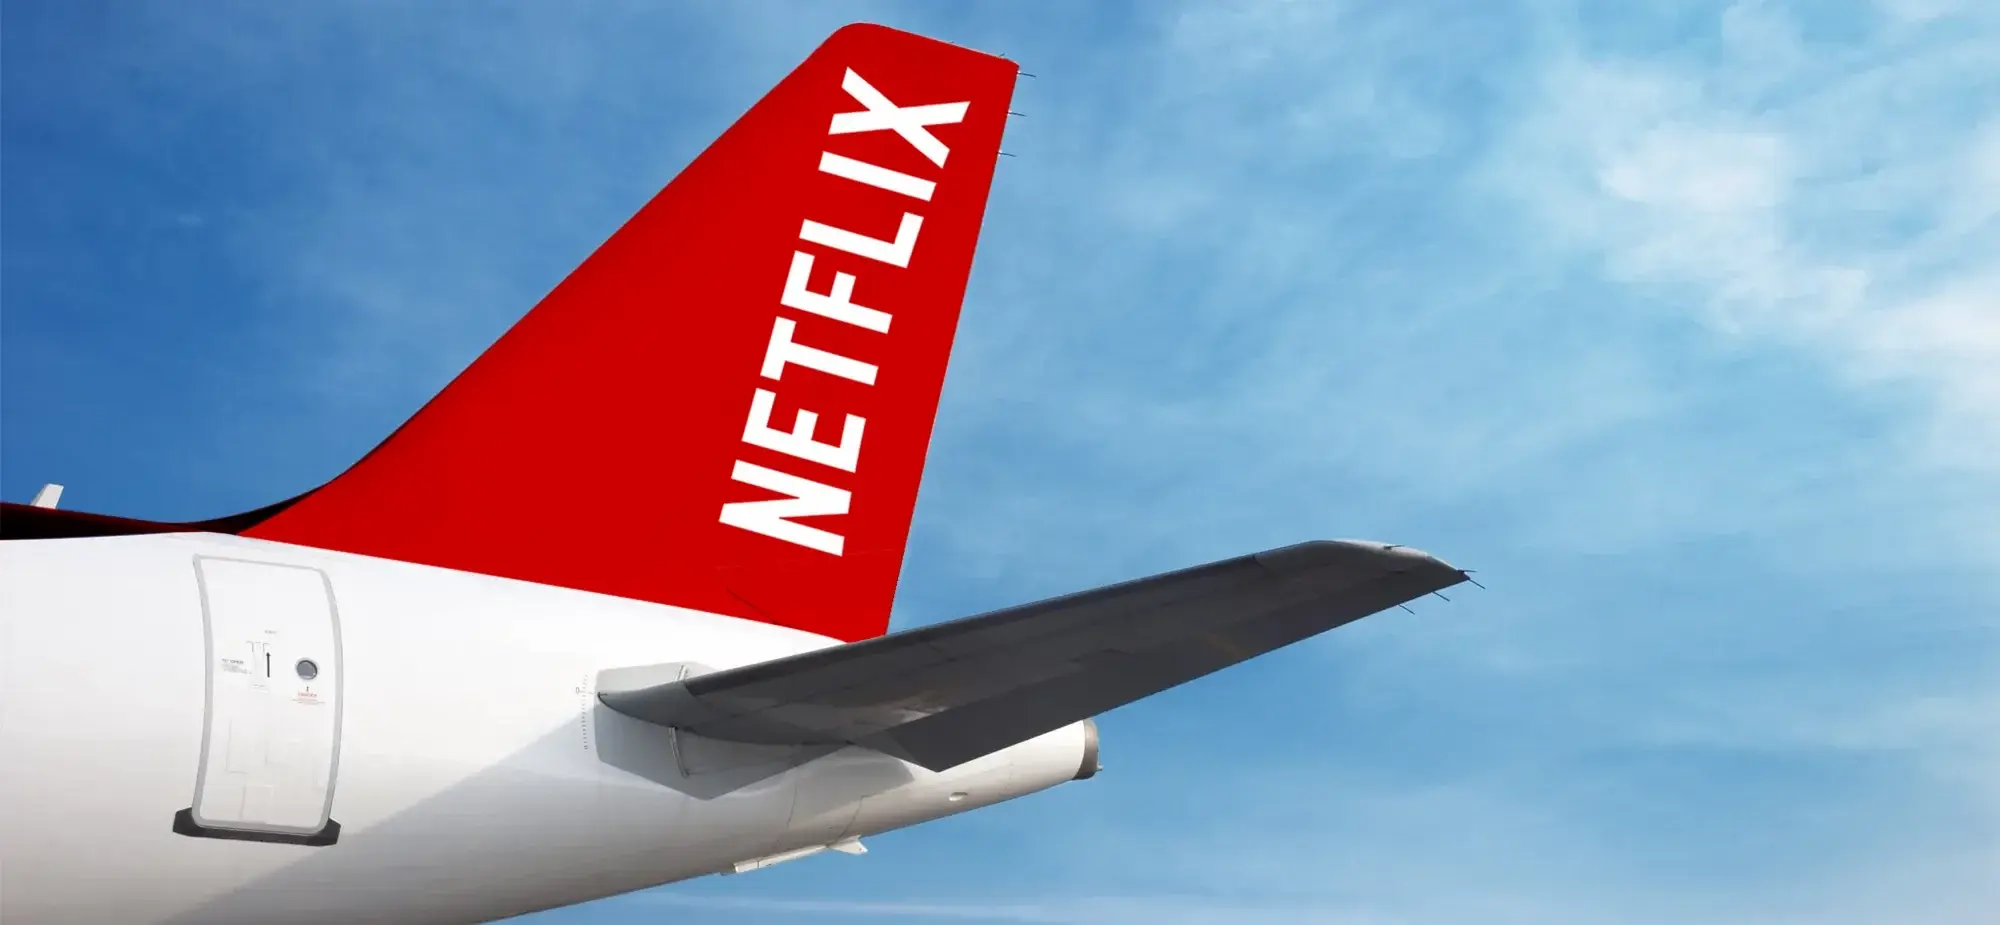 Netflix Plane